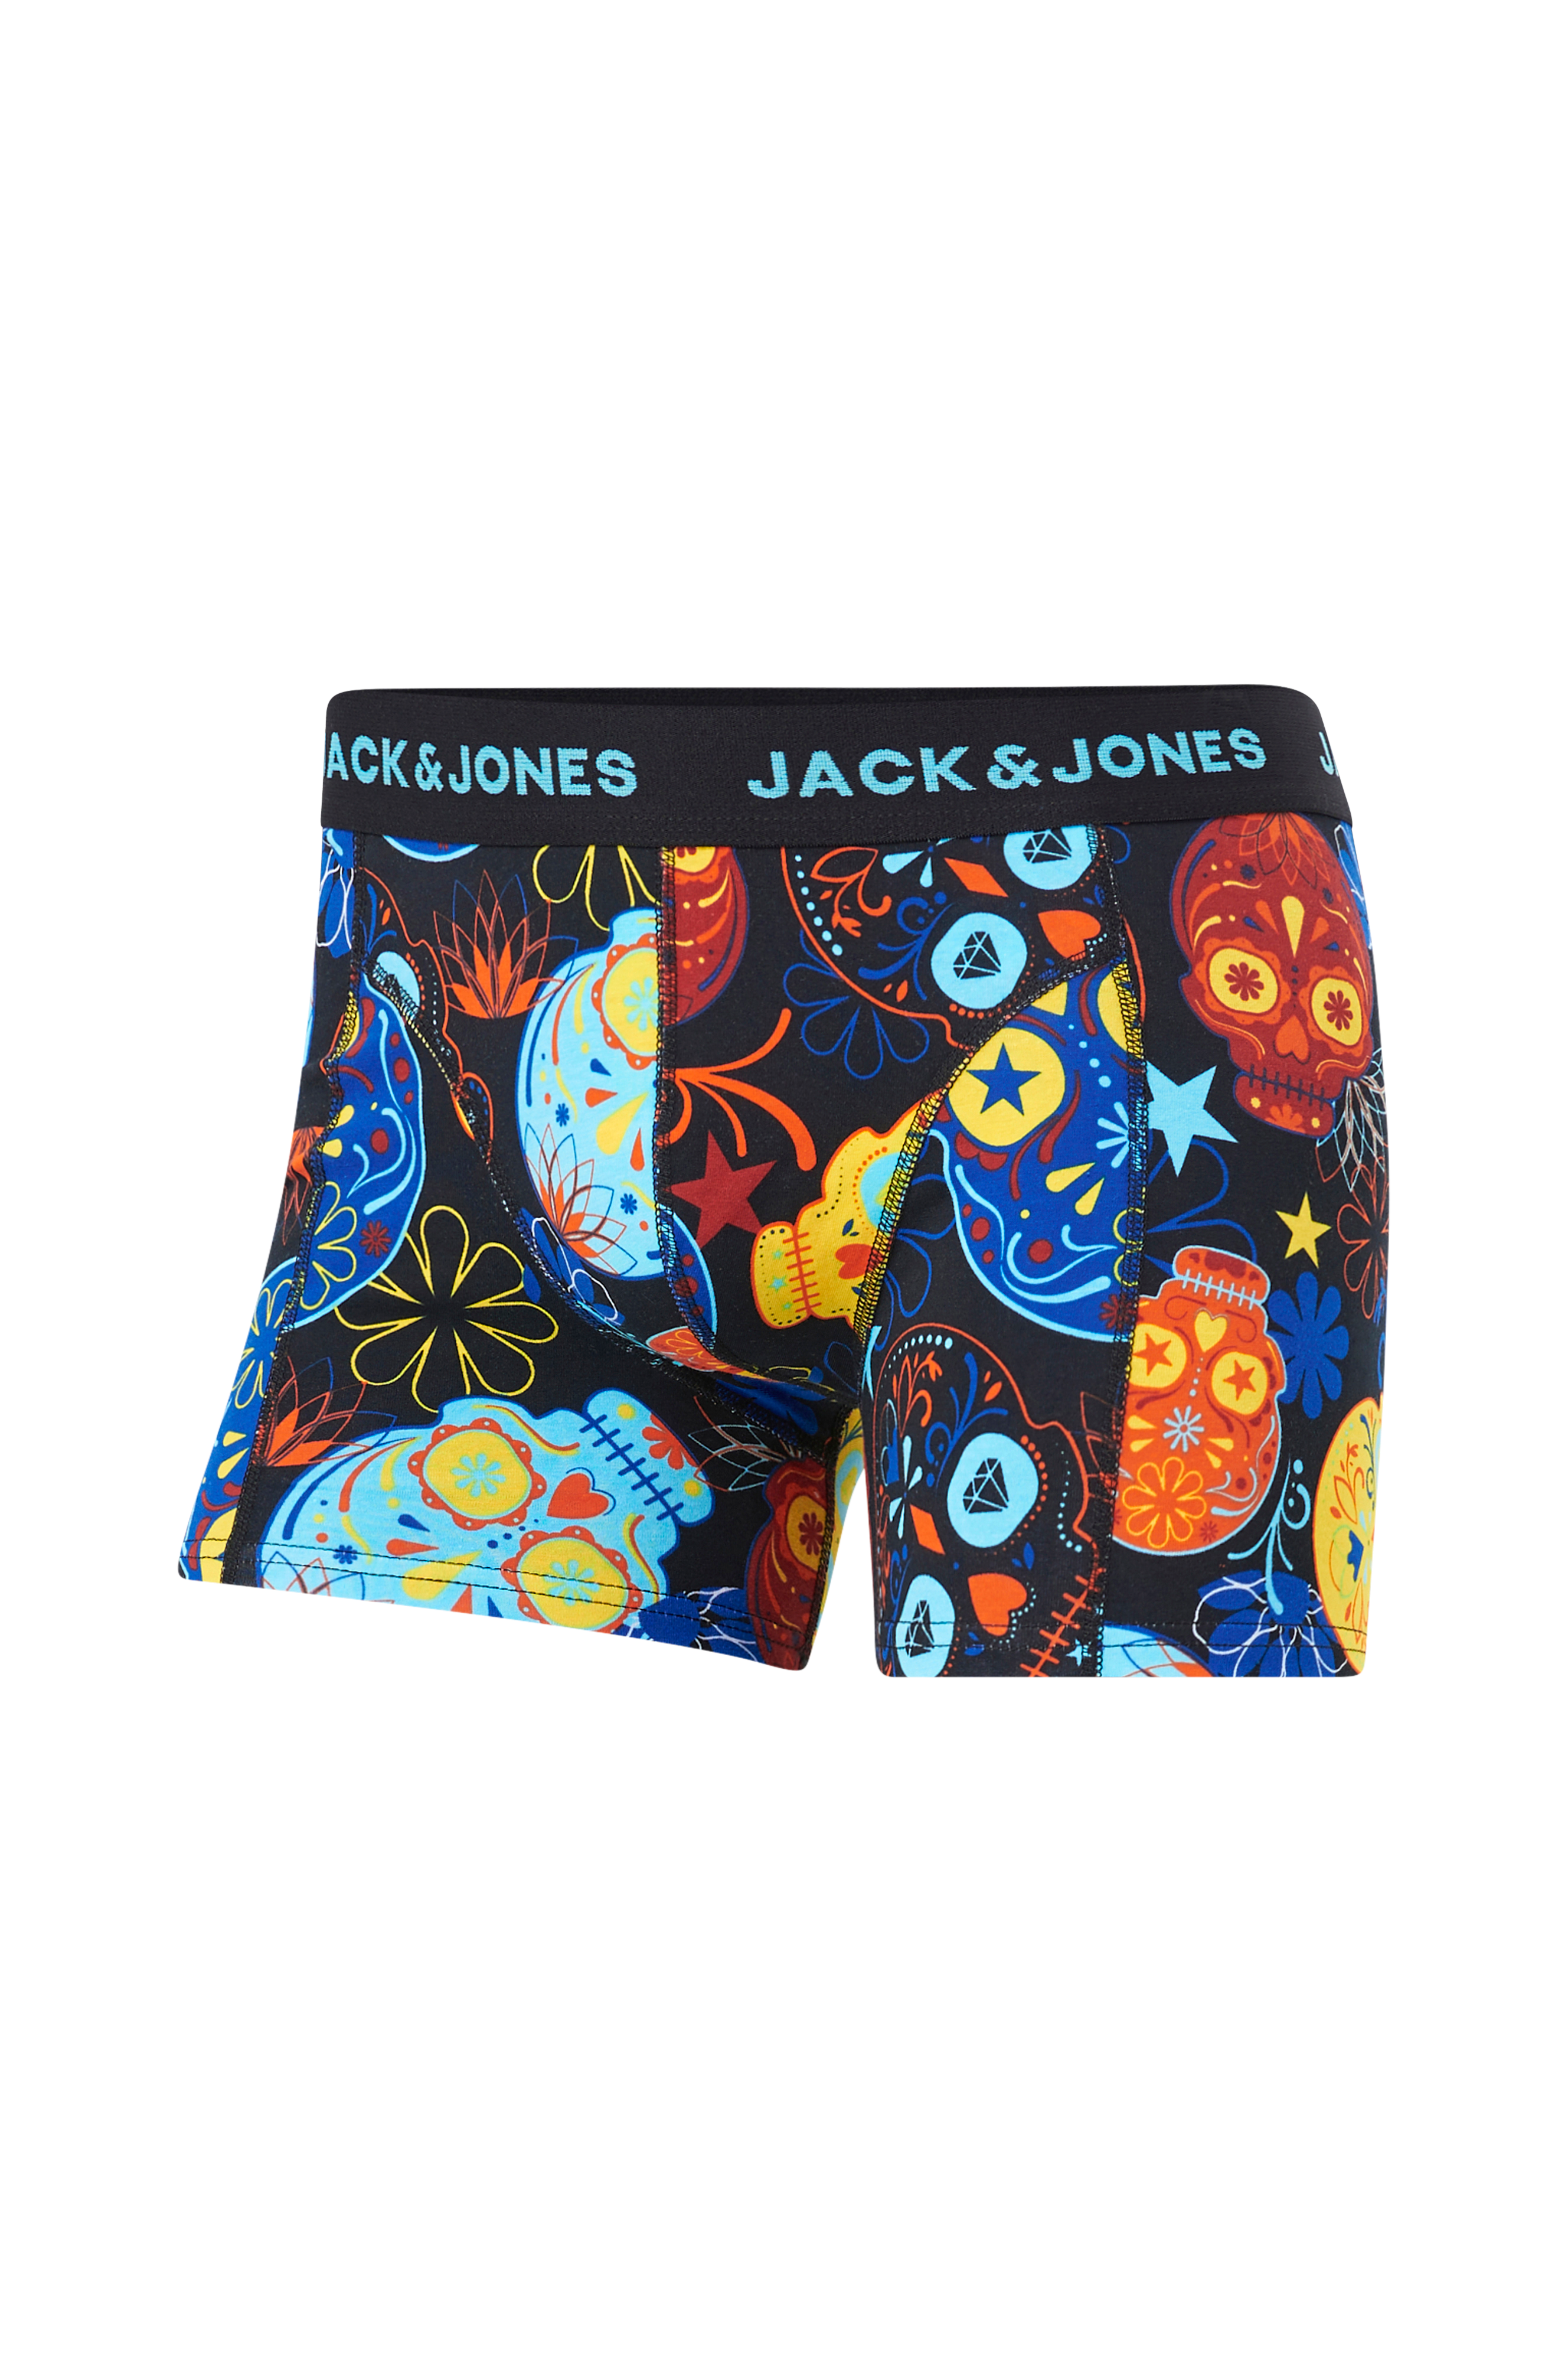 Jack & Jones Kalsonger 3-Pack Svart/Blå/Grå - Kalsongshopen